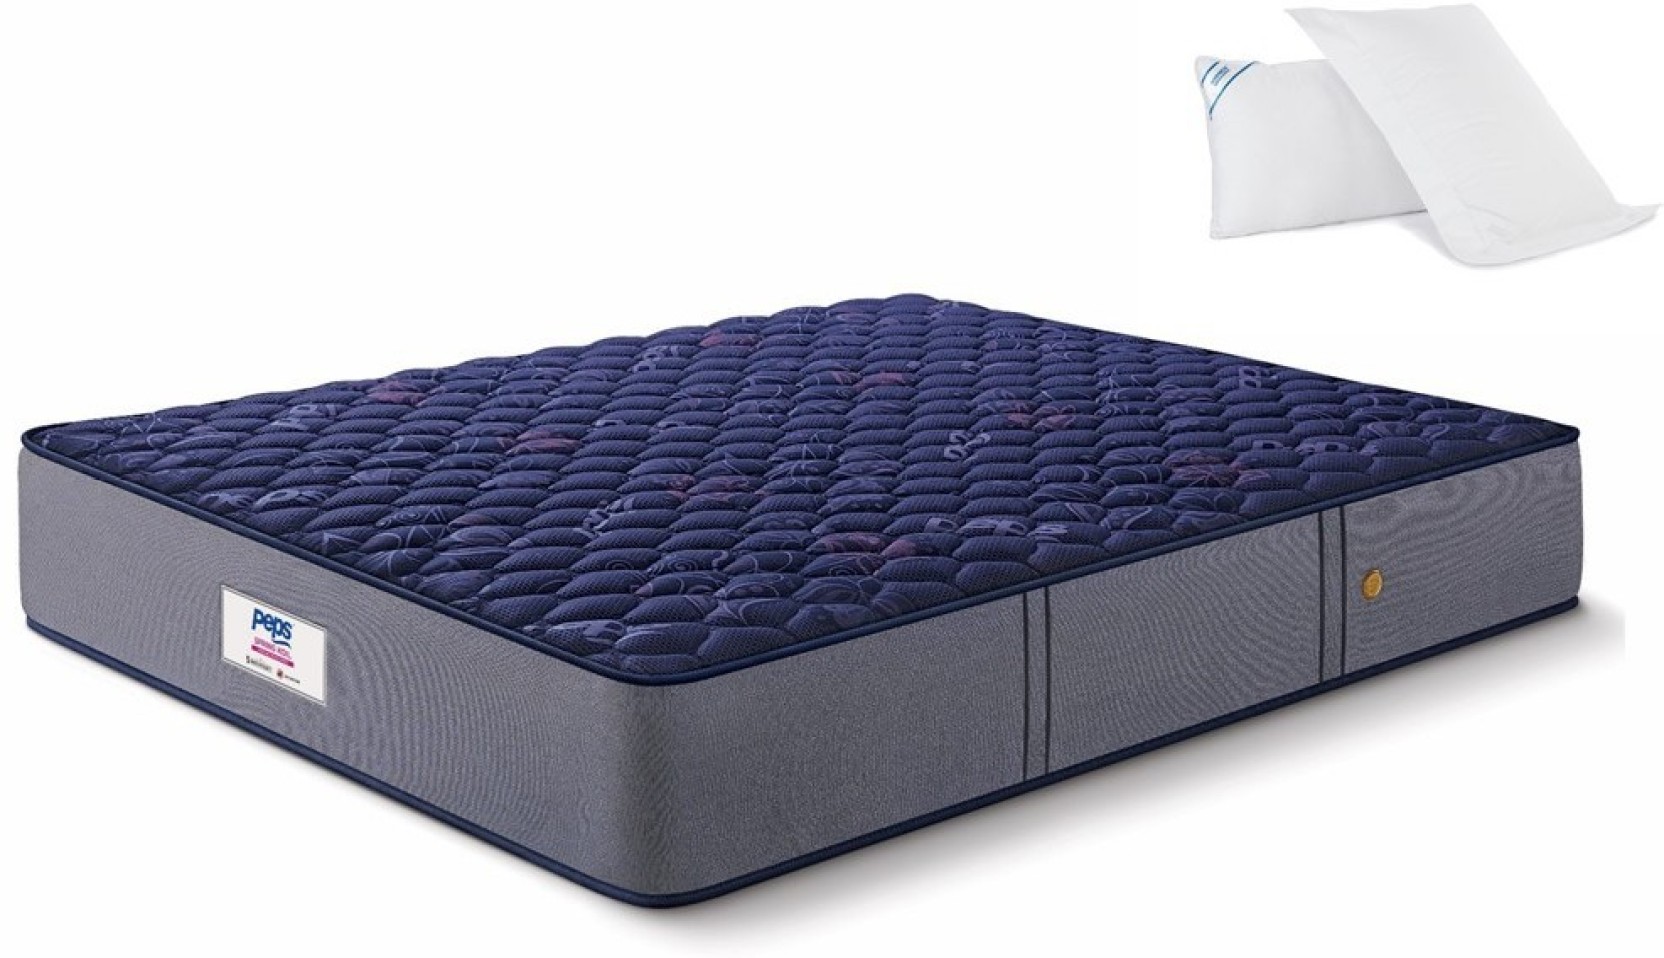 peps spring mattress price in india